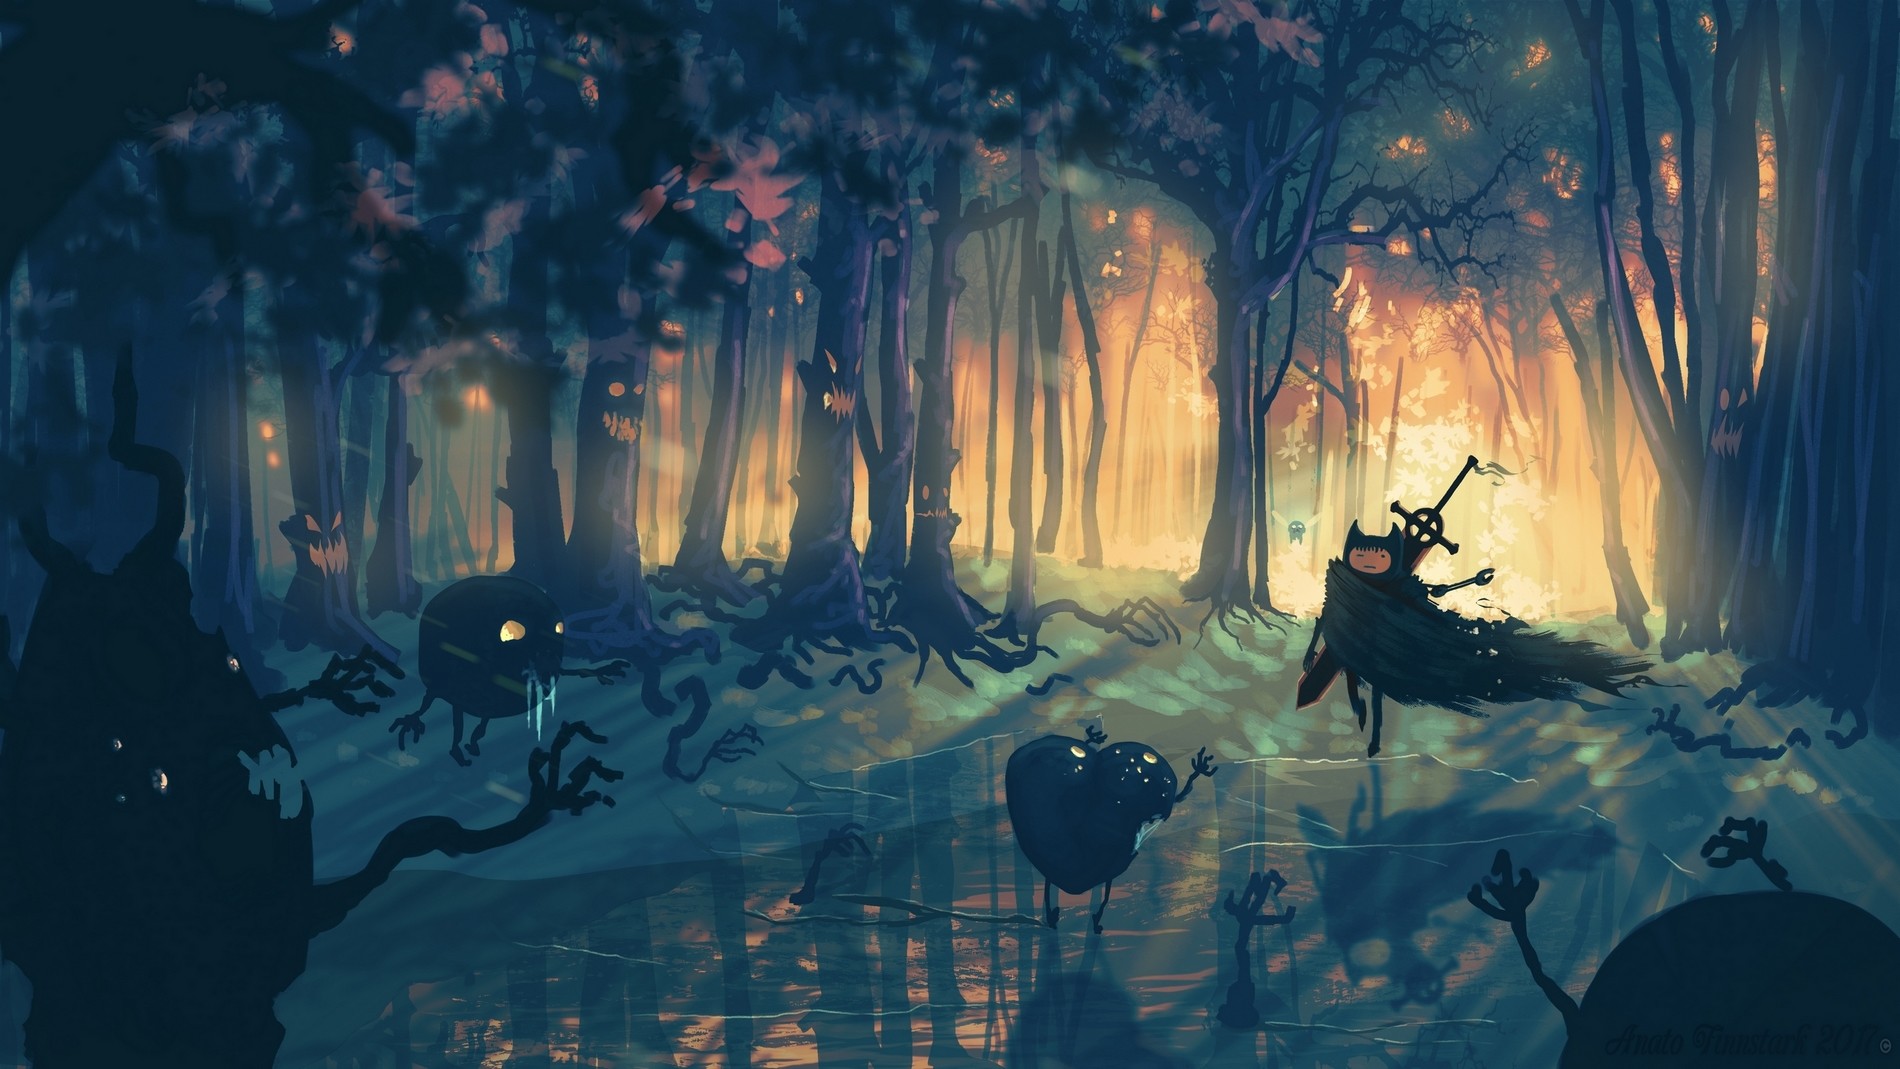 Berserk Adventure Time Black Swordsman Guts Trees Swamp Finn The Human Crossover Parody Fantasy Armo 1900x1069